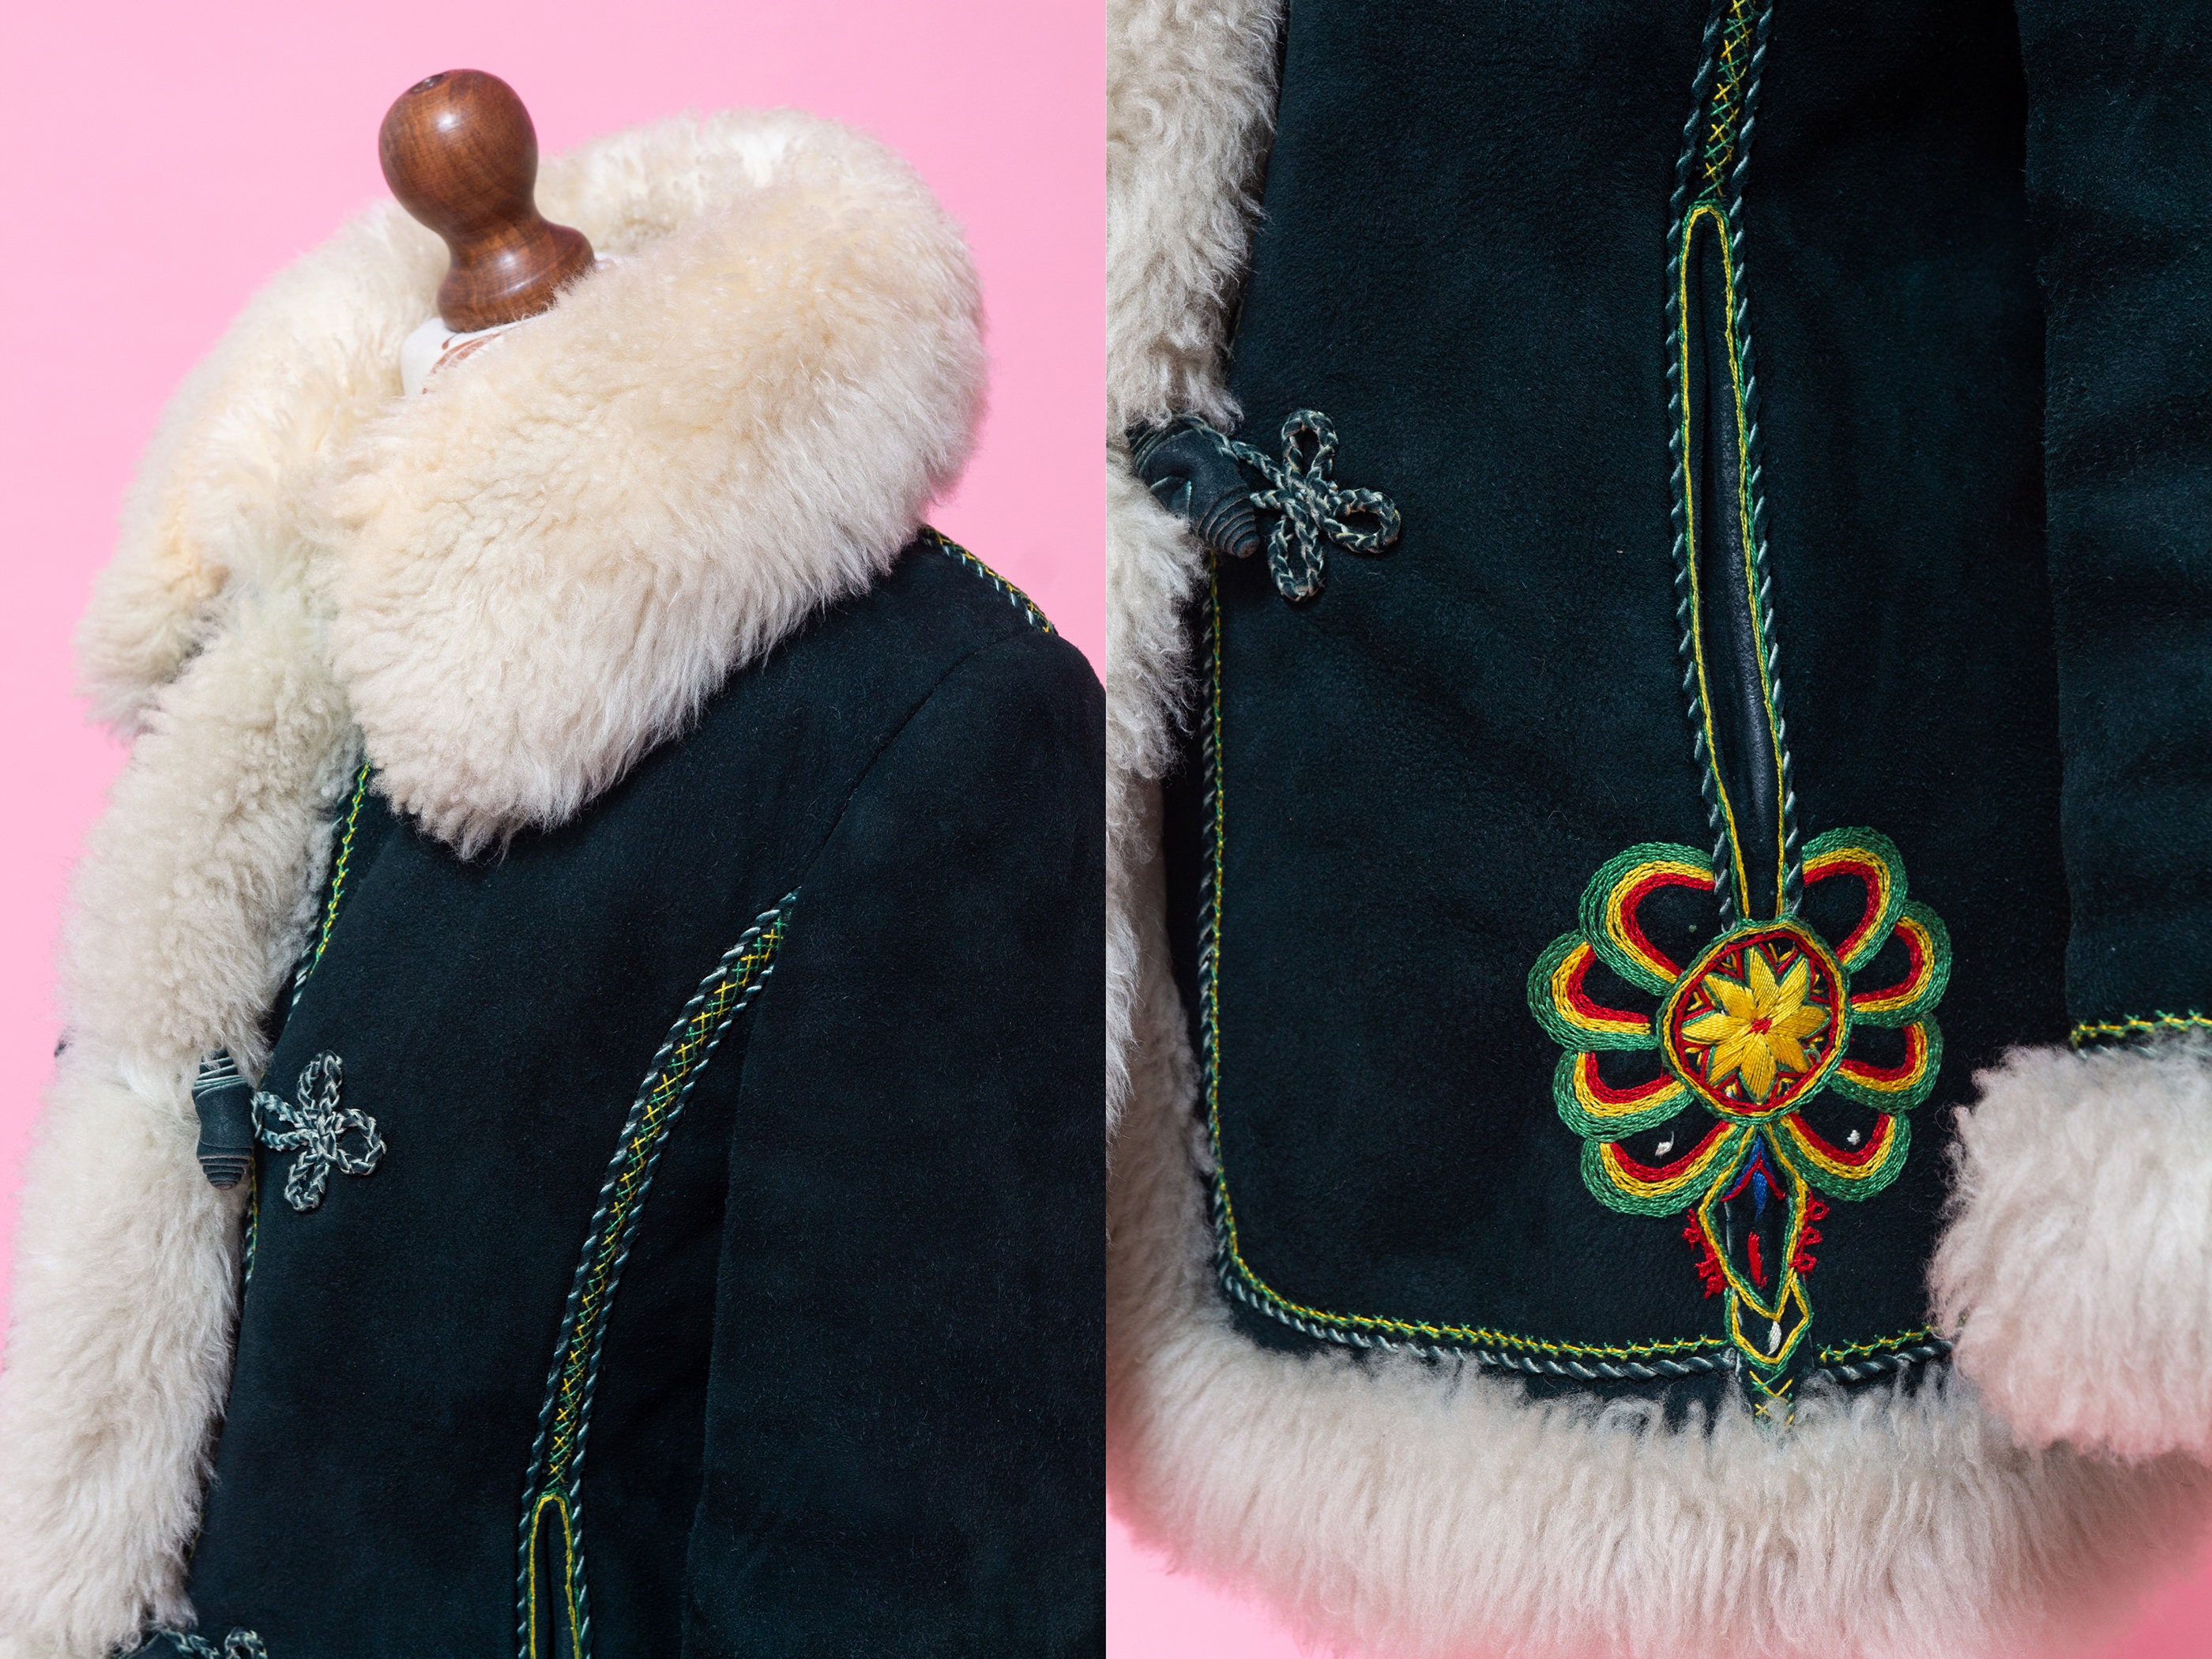 Vintage 70s Afghan Coat Jacket Shearling Sheepskin Russian -  Norway